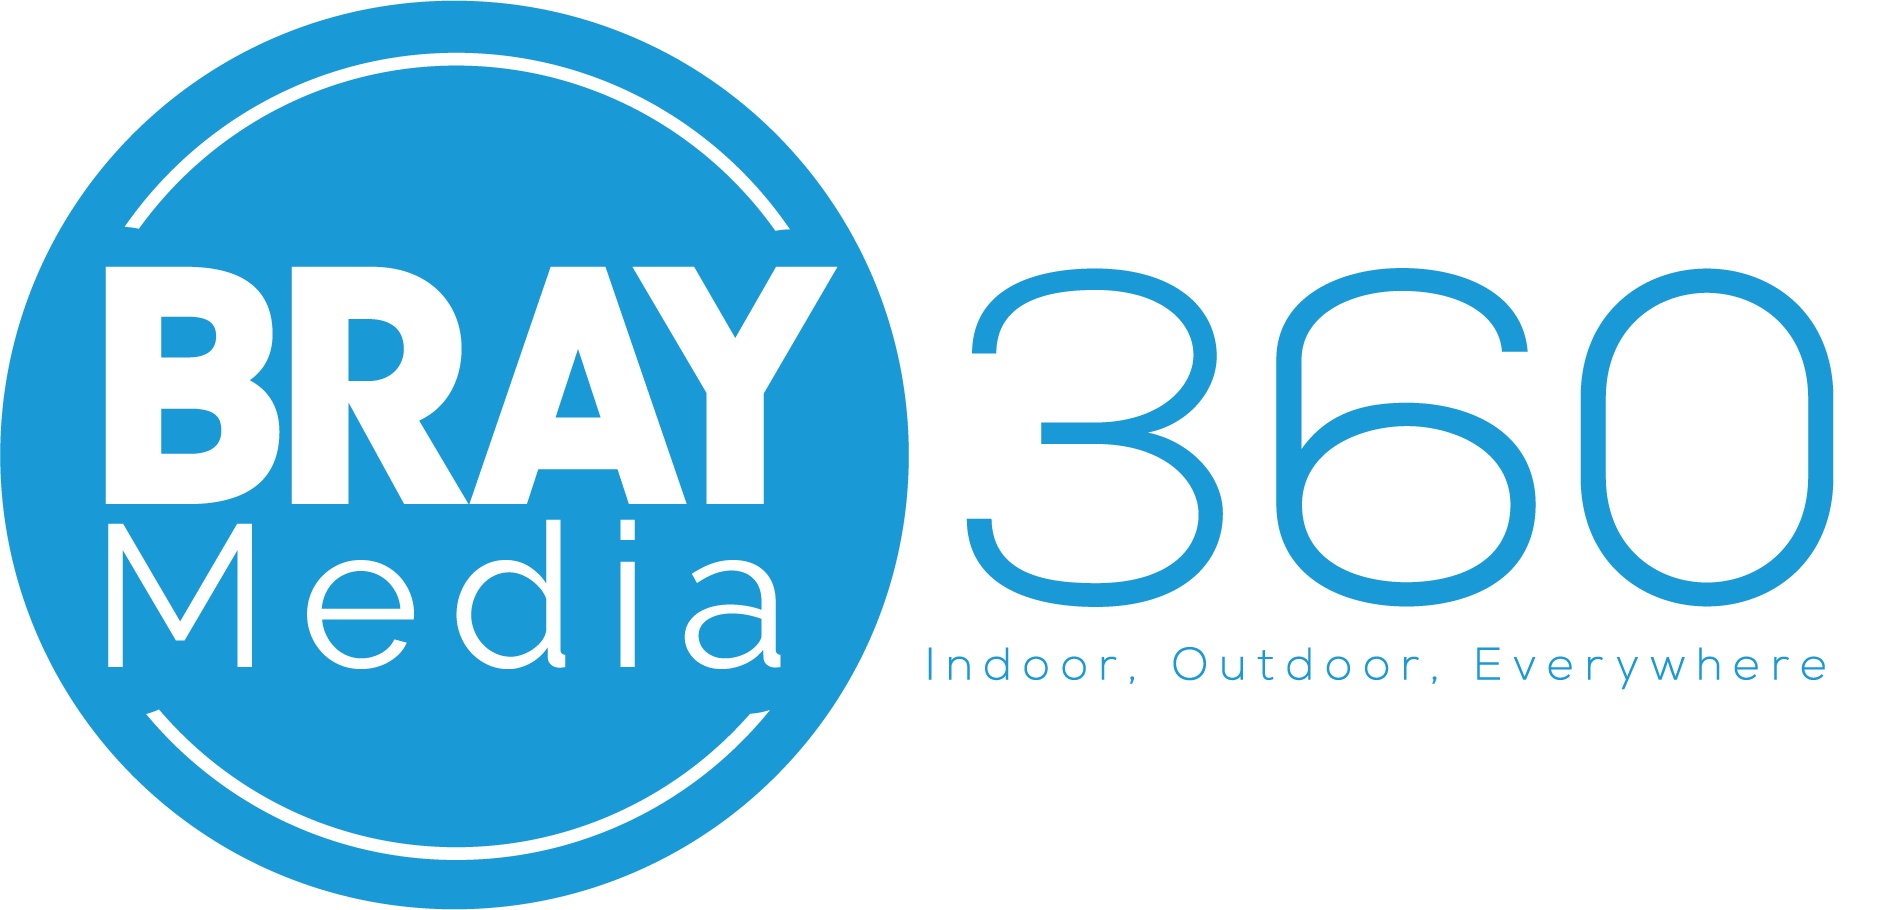 Bray Media 360 - Advertising & Media Indoor, Outdoor & Everywhere